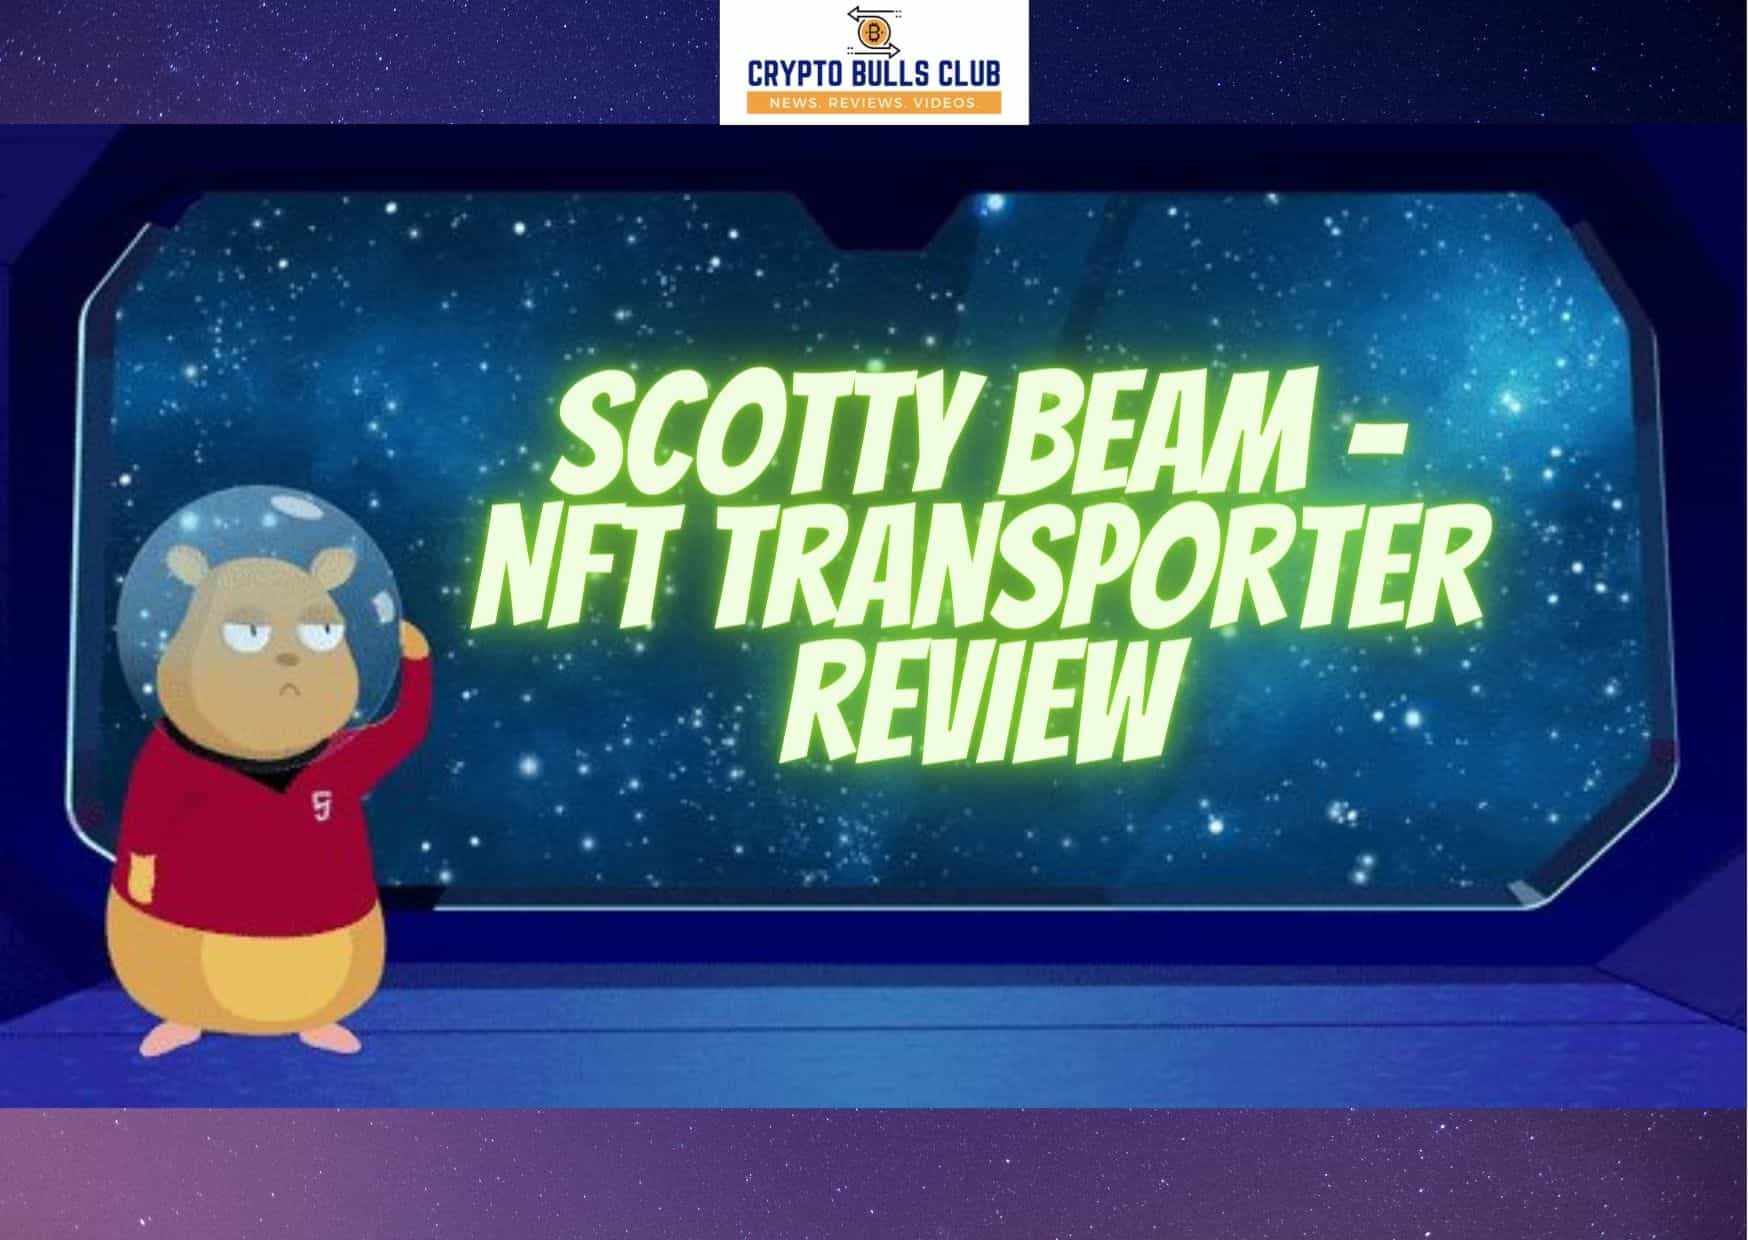 Scotty beam review